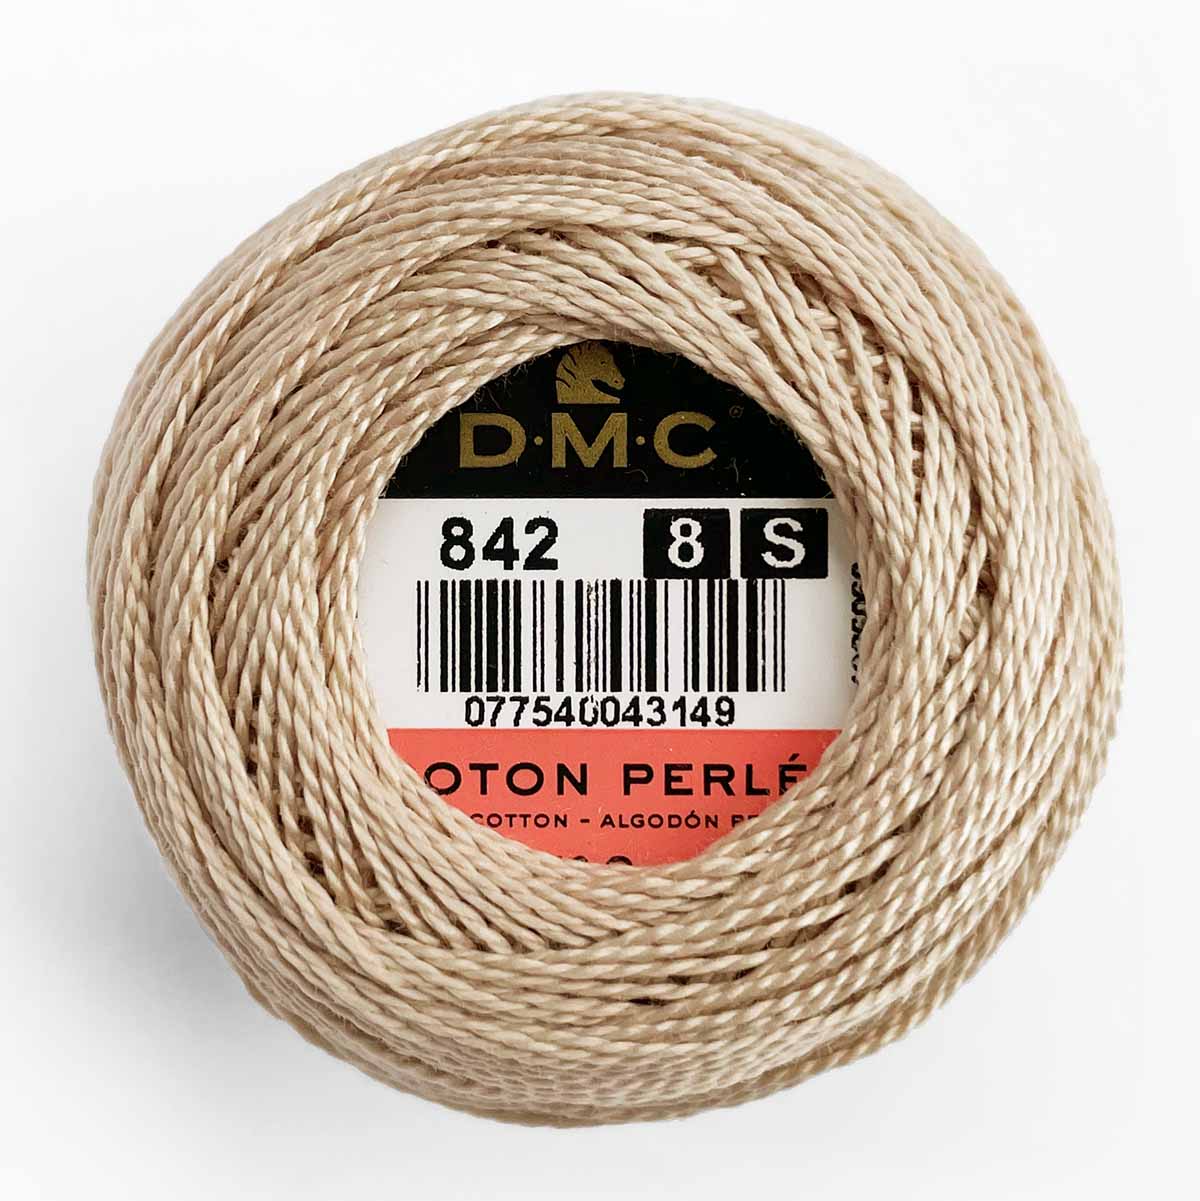 DMC 842: Very Light Beige Brown (size 8 perle cotton)